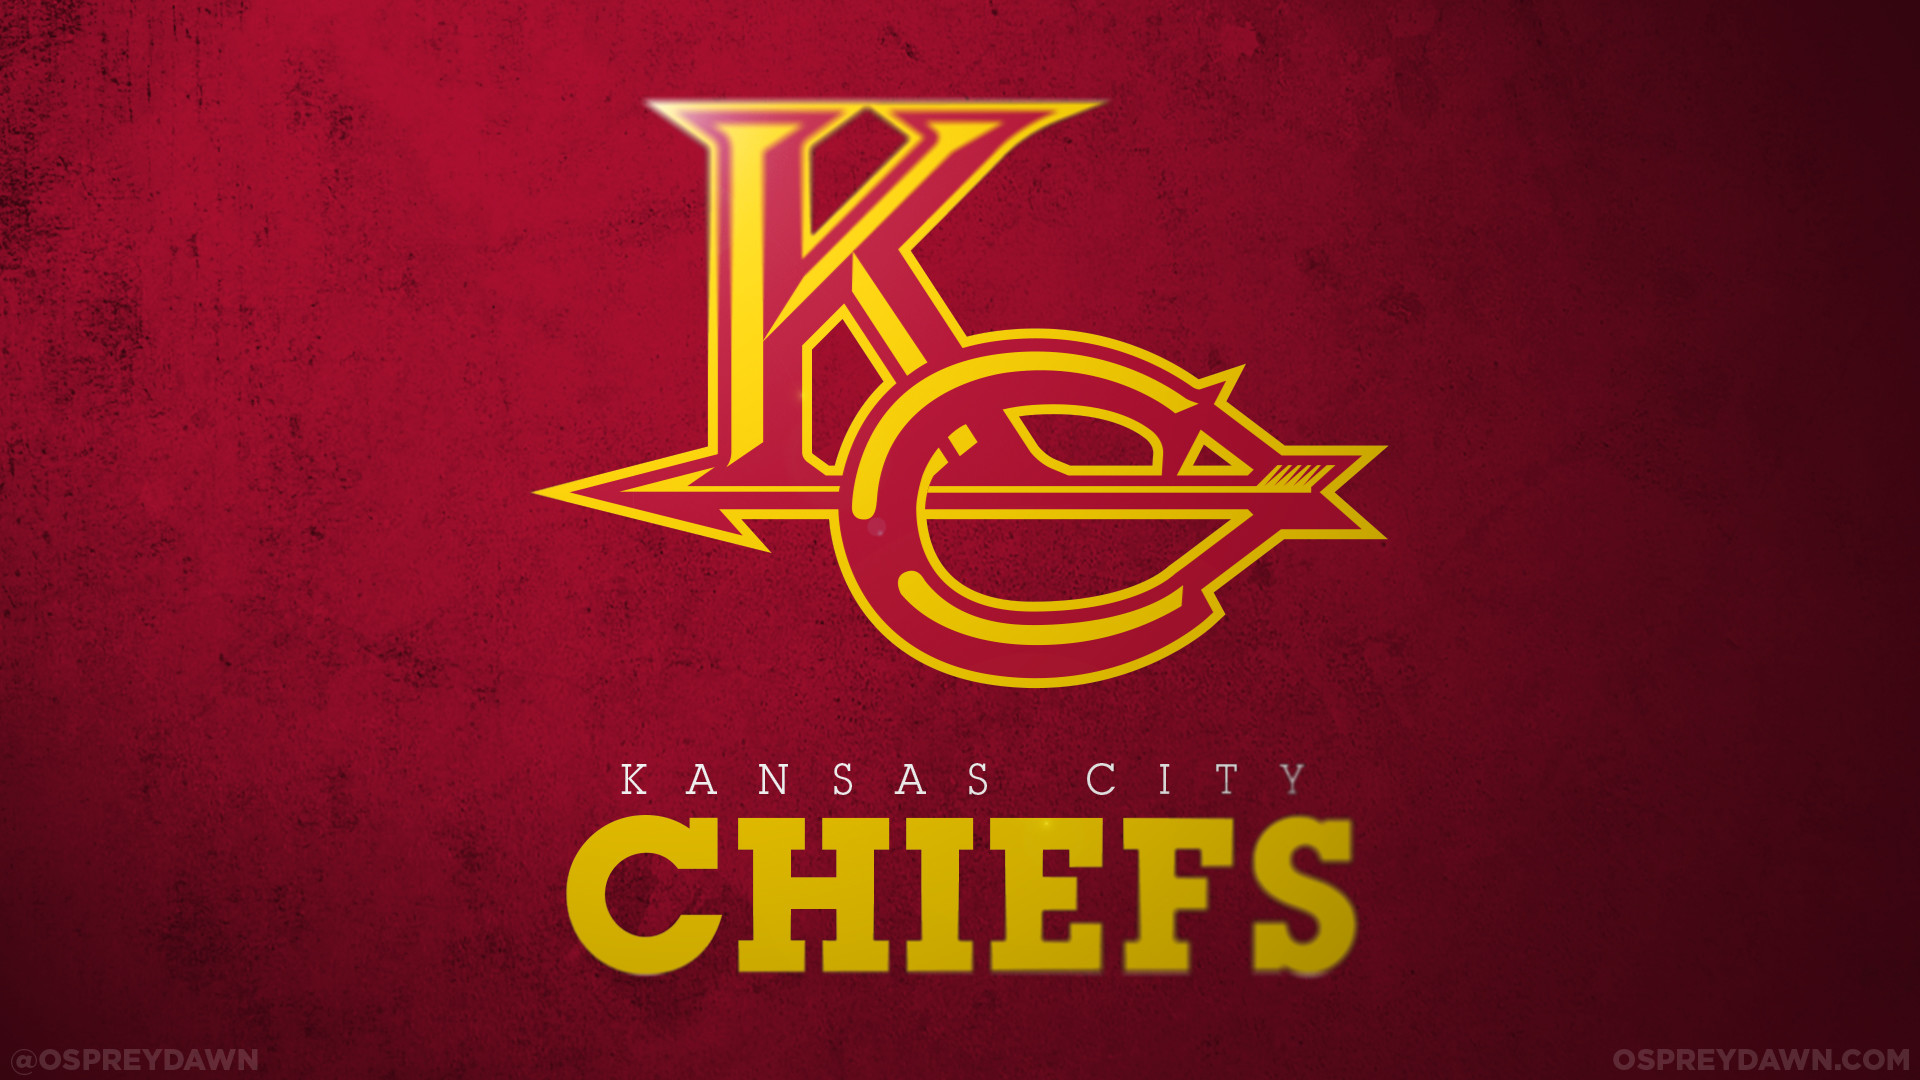 1920x1080 Kansas City Chiefs Football Team Logo. New York Giants ...